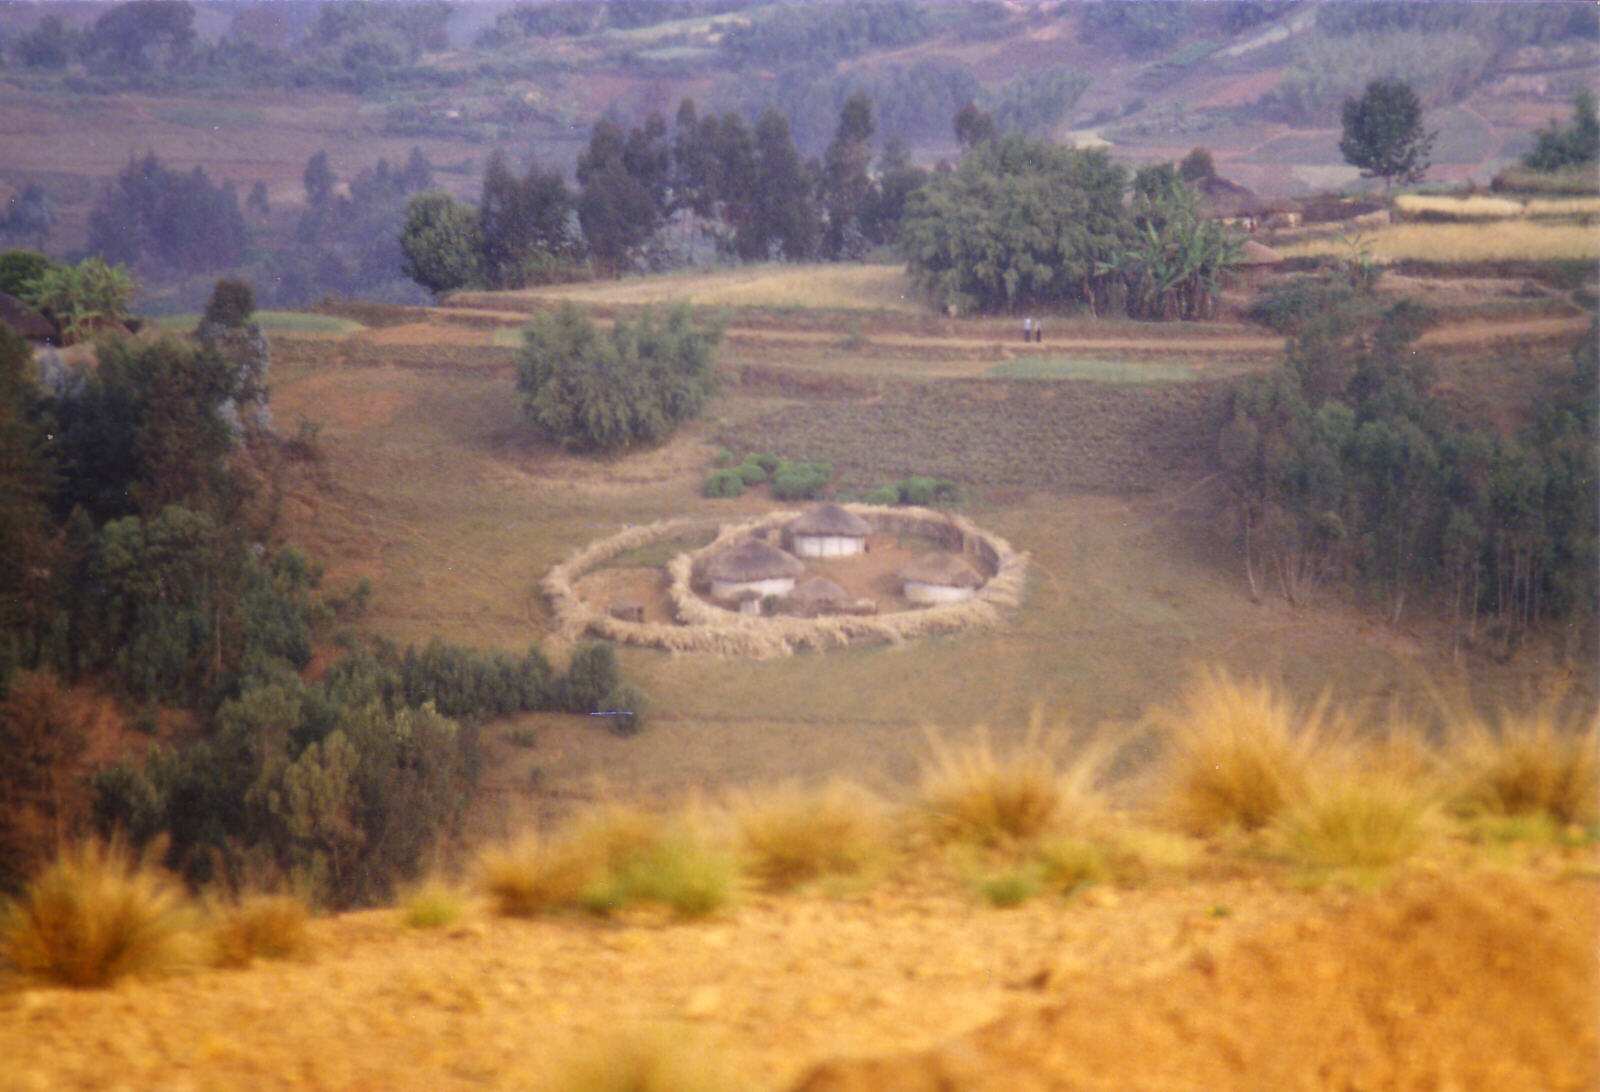 A farmstead by the road in Burundi